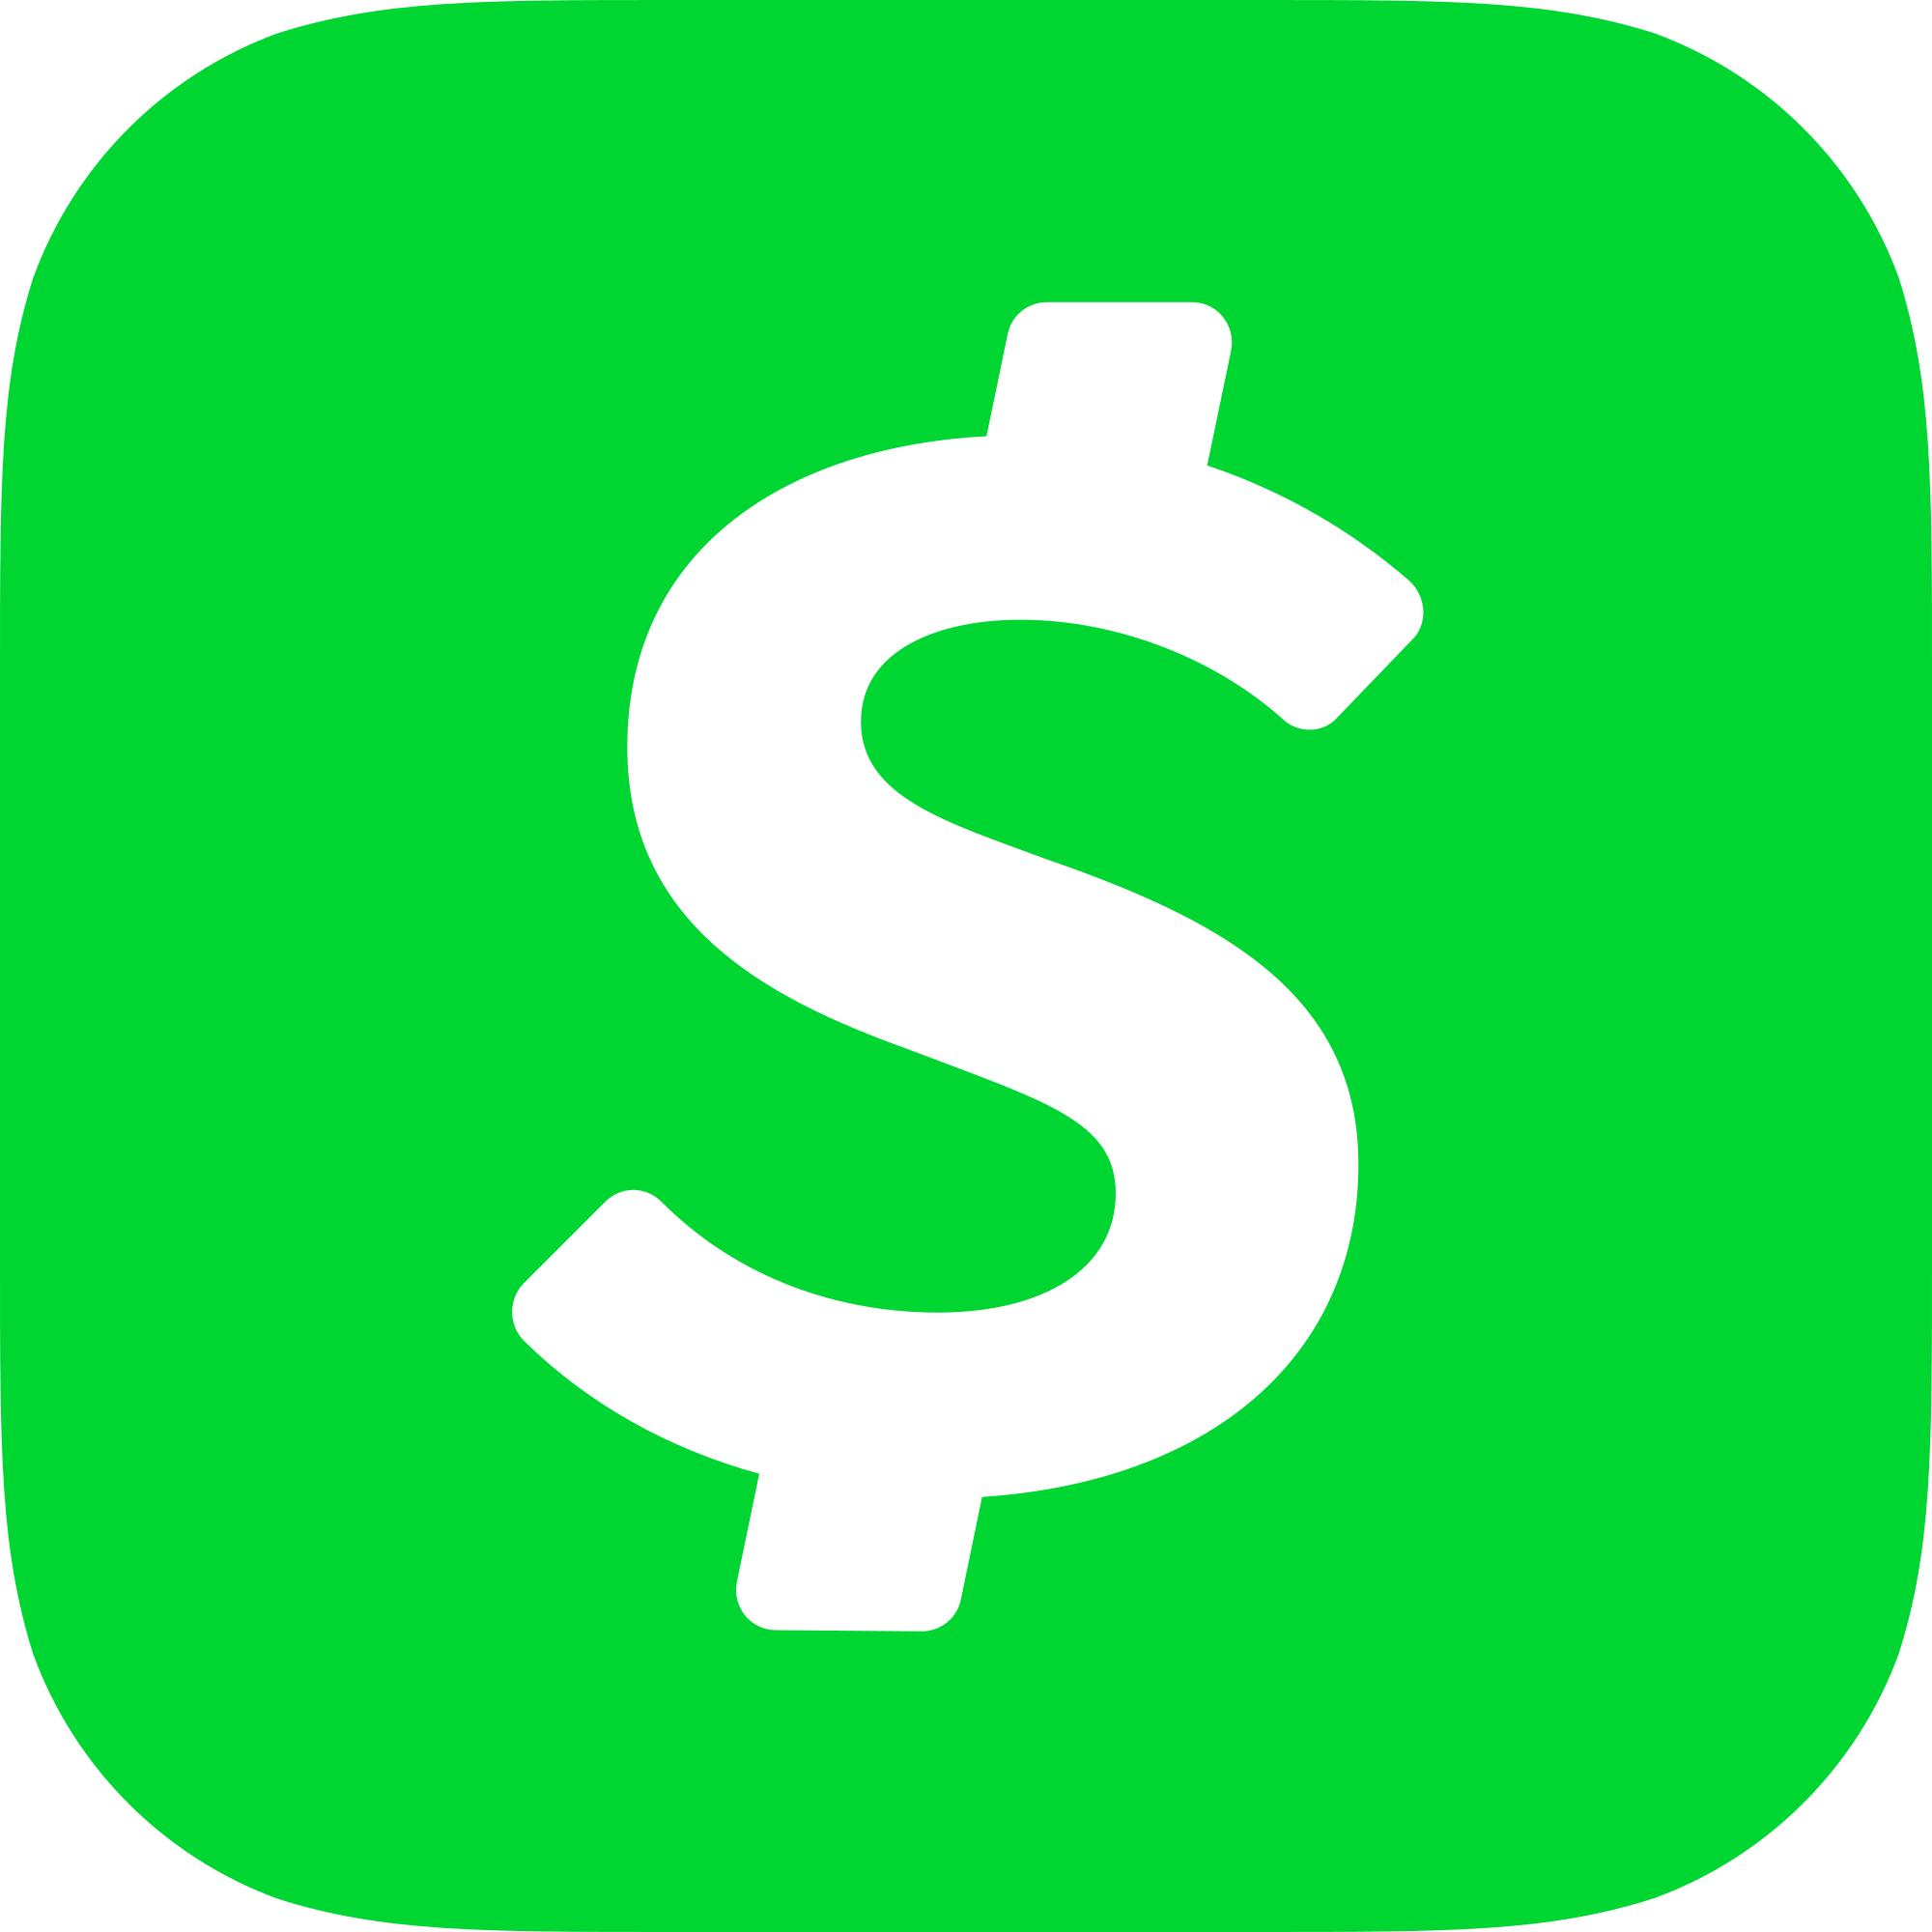 App Logo - Square Cash app logo.svg